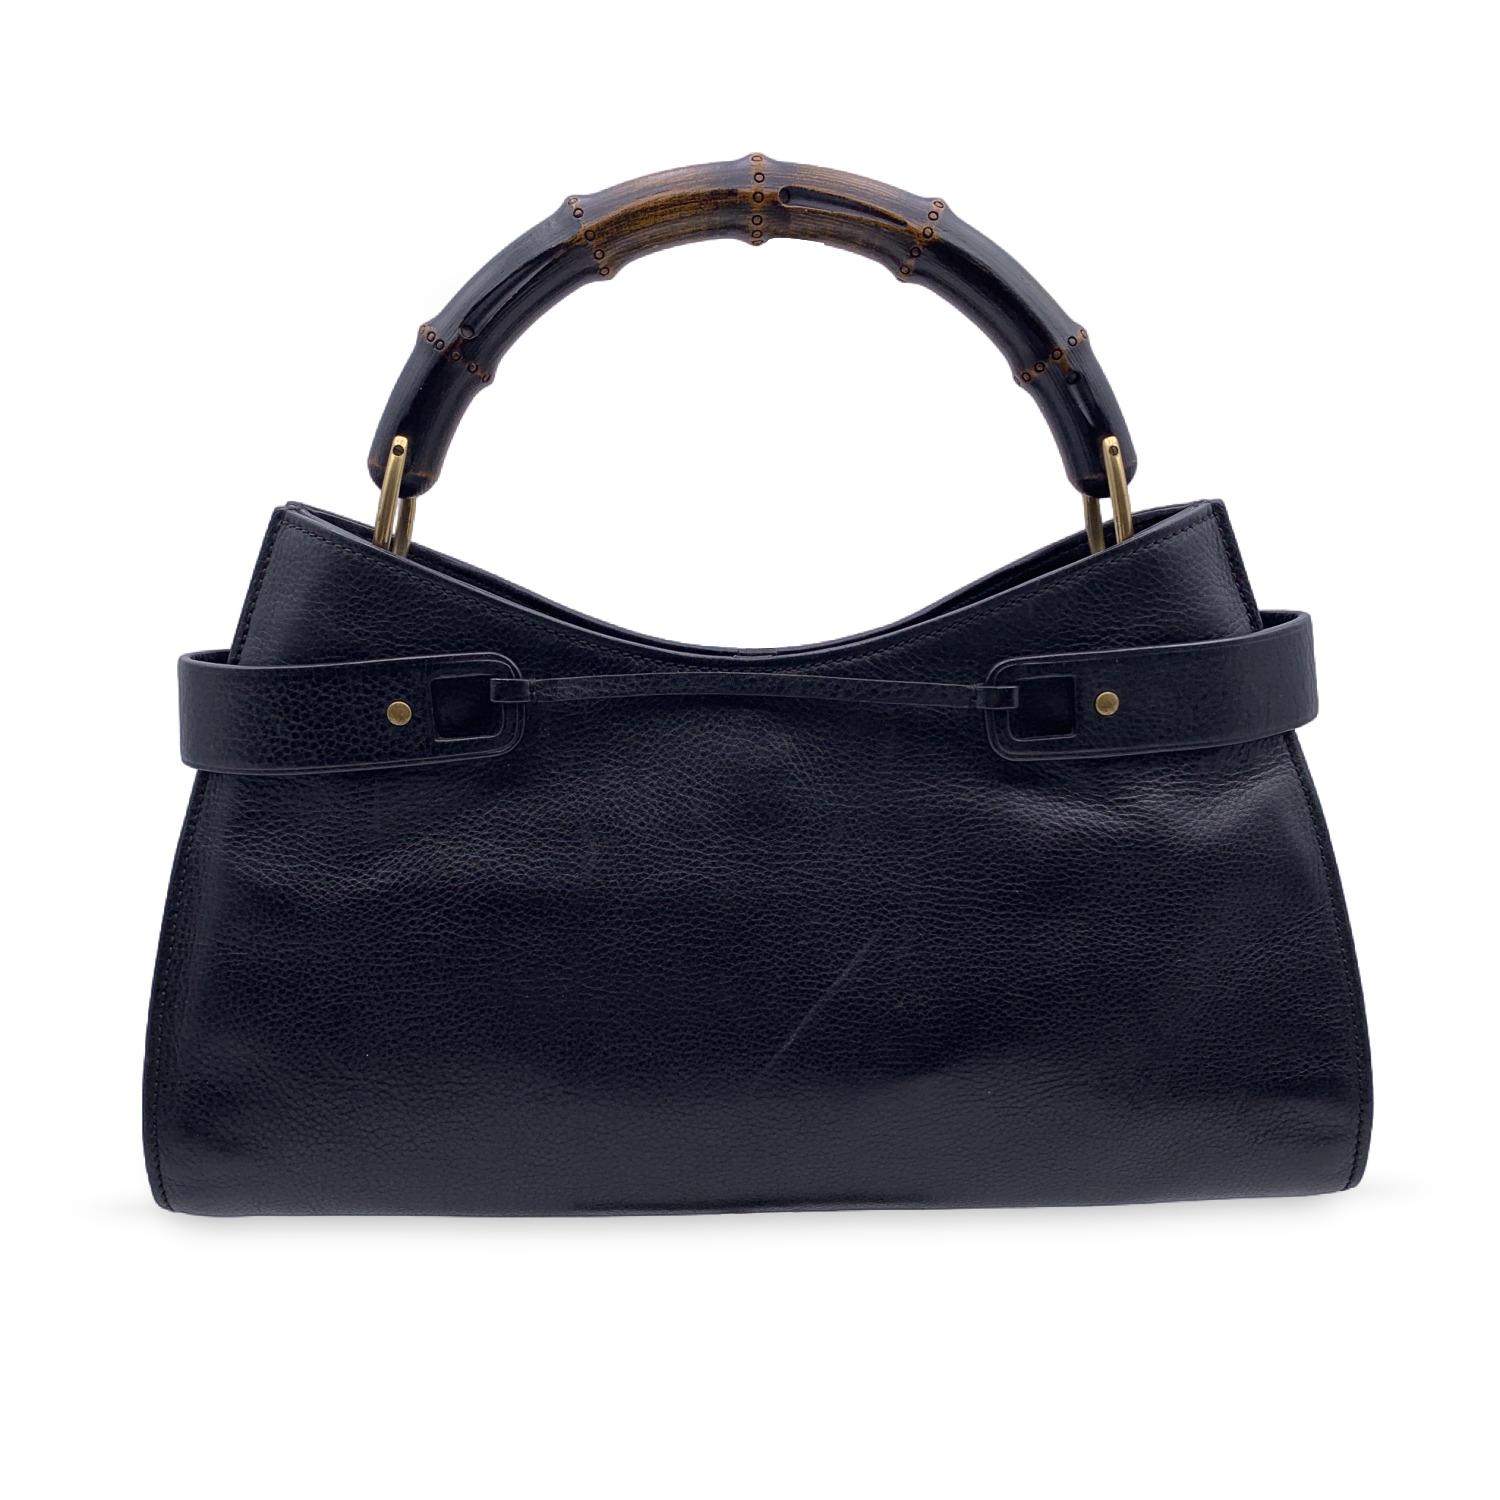 Women's Gucci Black Leather Bamboo Tote Bag Handbag Satchel